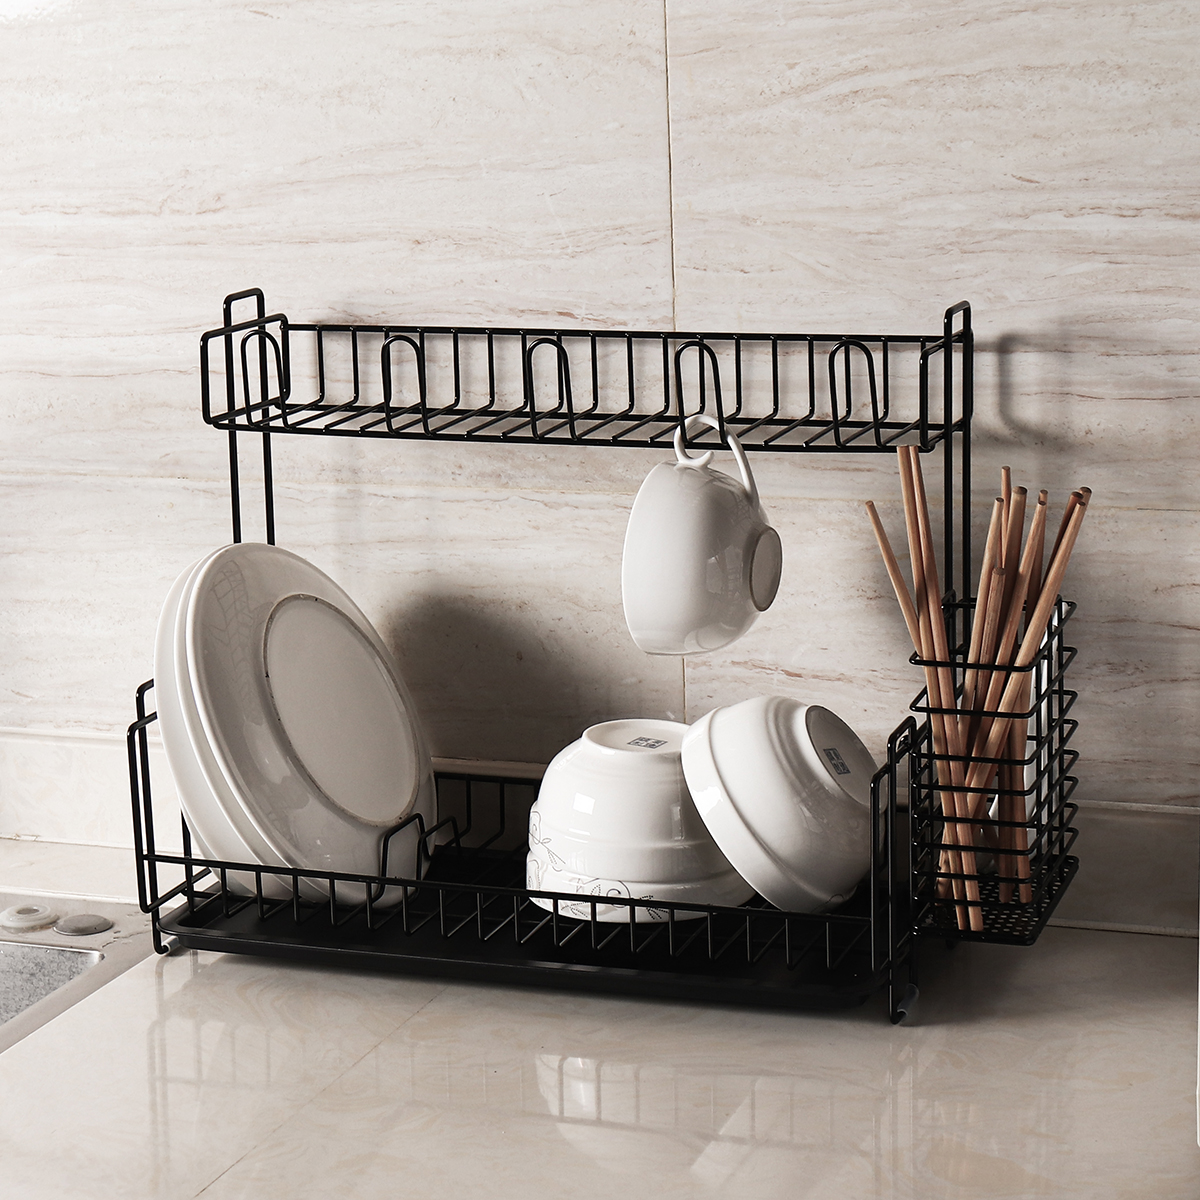 Dish-Drainer-Kitchen-Drying-Drain-Shelf-Sink-Holder-Cup-Bowl-Storage-Home-Basket-Stand-1608286-2